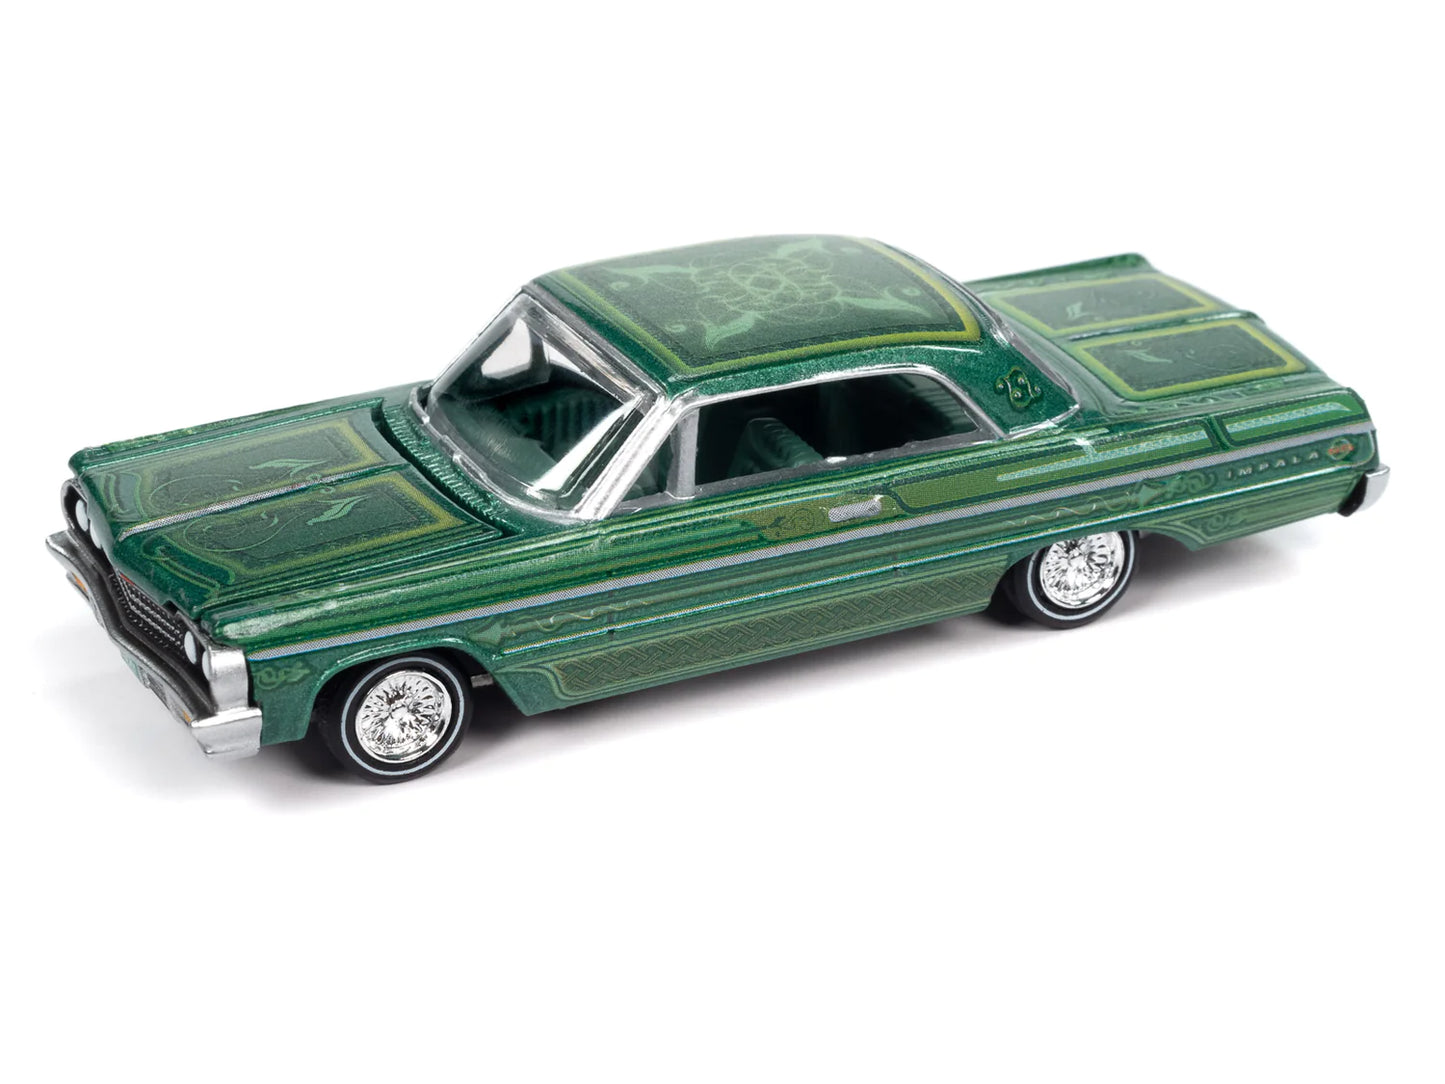 Racing Champions Mint 1964 Chevy Impala Lowrider Green 1:64